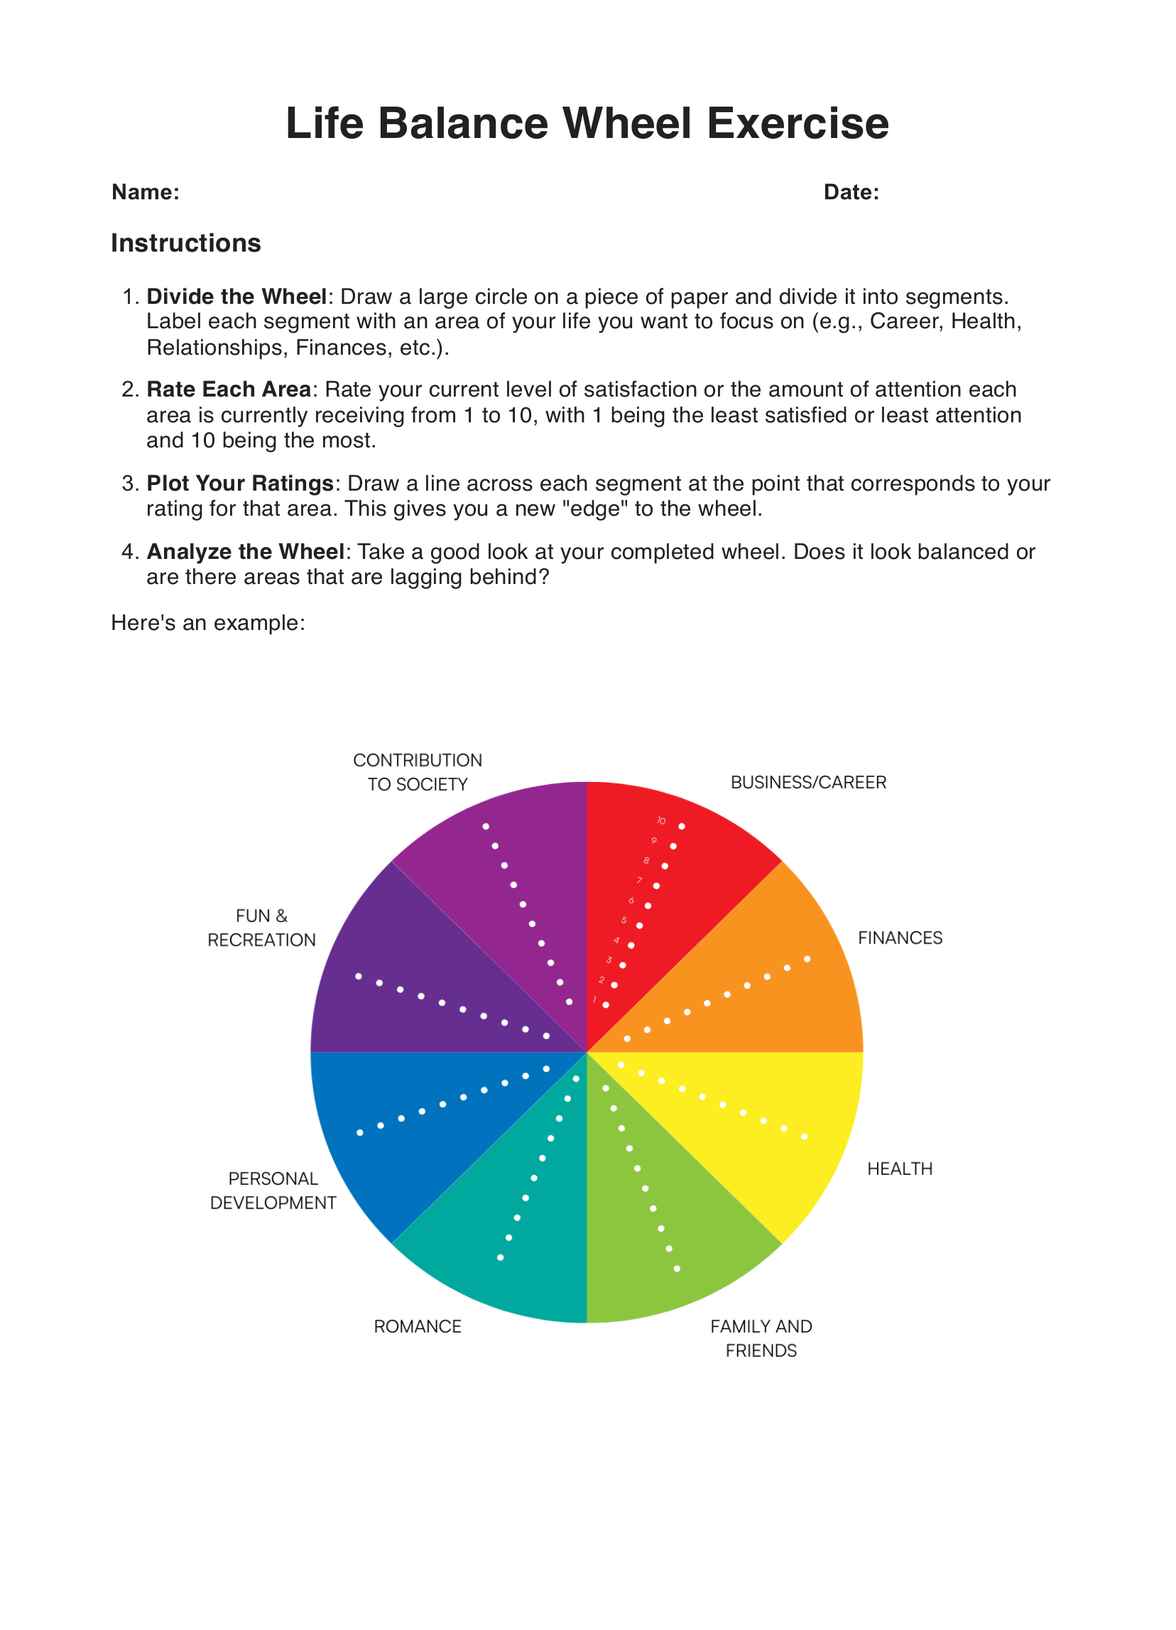 Life Balance Wheels PDF Example